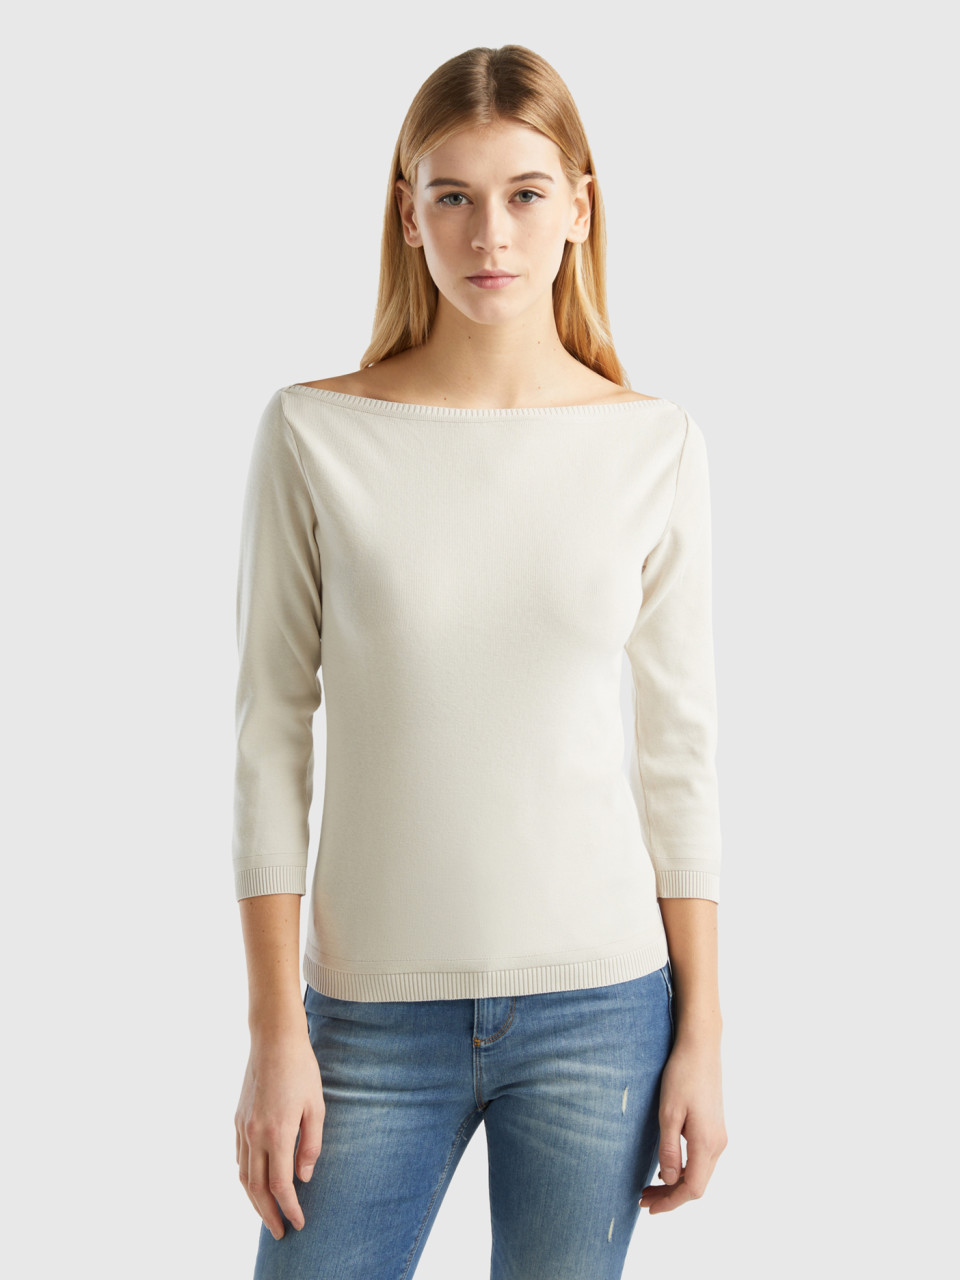 Benetton Online exclusive, 100% Cotton Boat Neck Sweater, Beige, Women